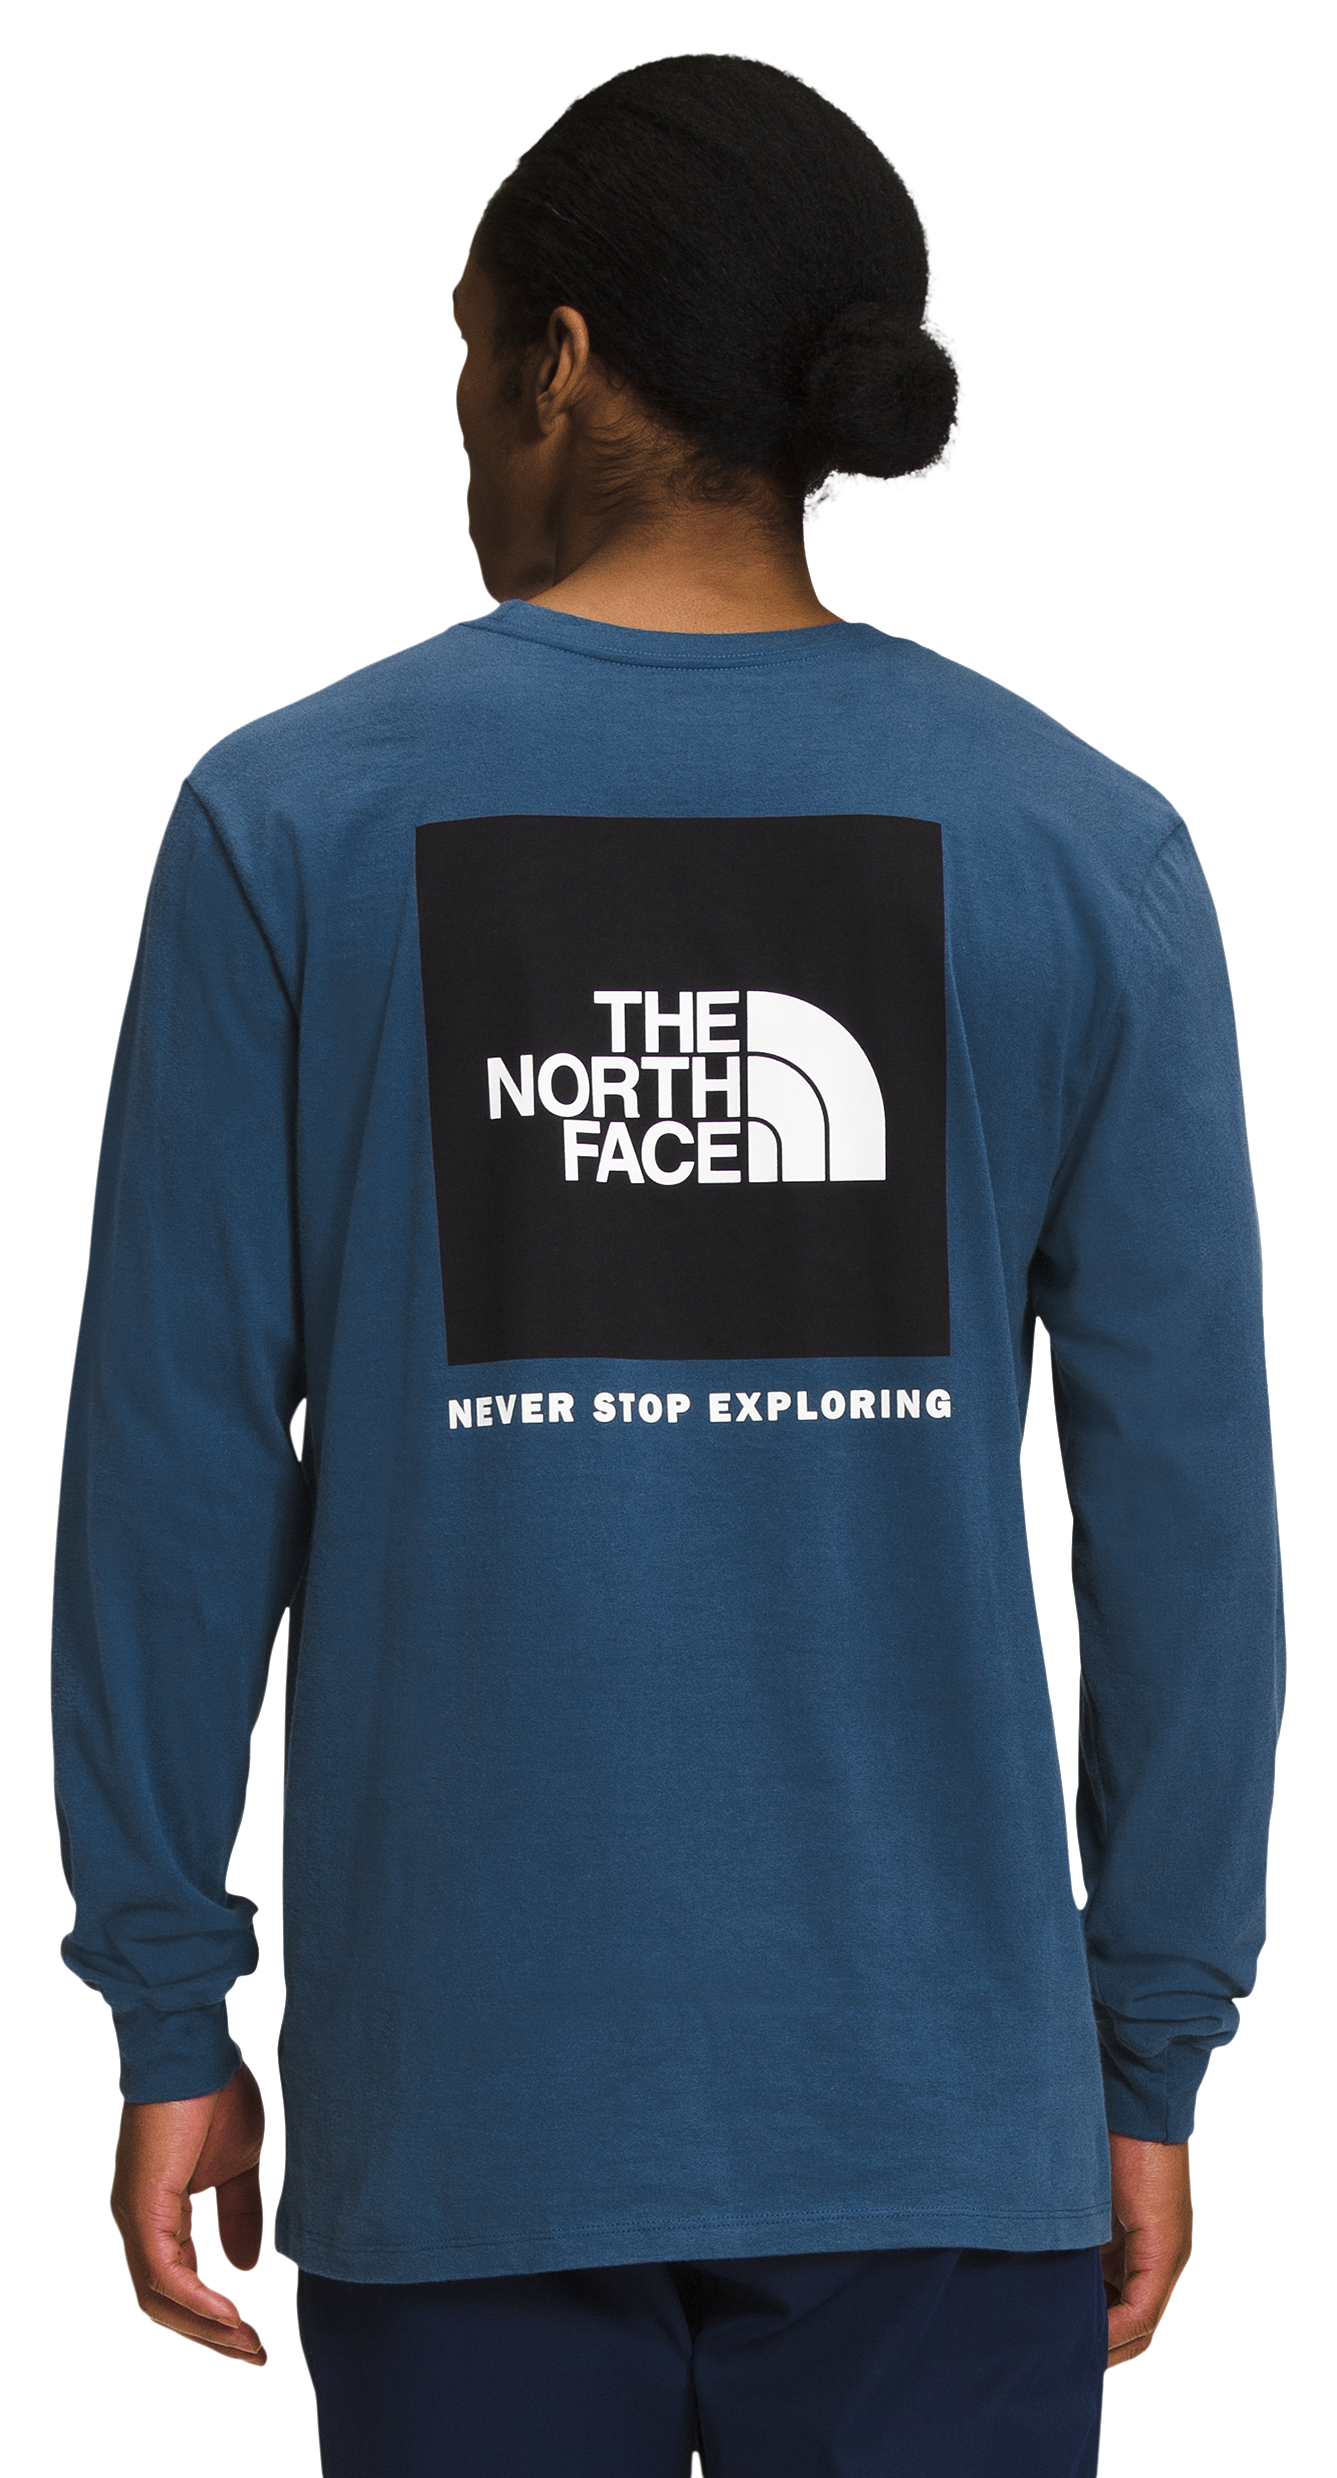 The North Face Box NSE Long-Sleeve Shirt for Men - Shady Blue/TNF Black - 2XL